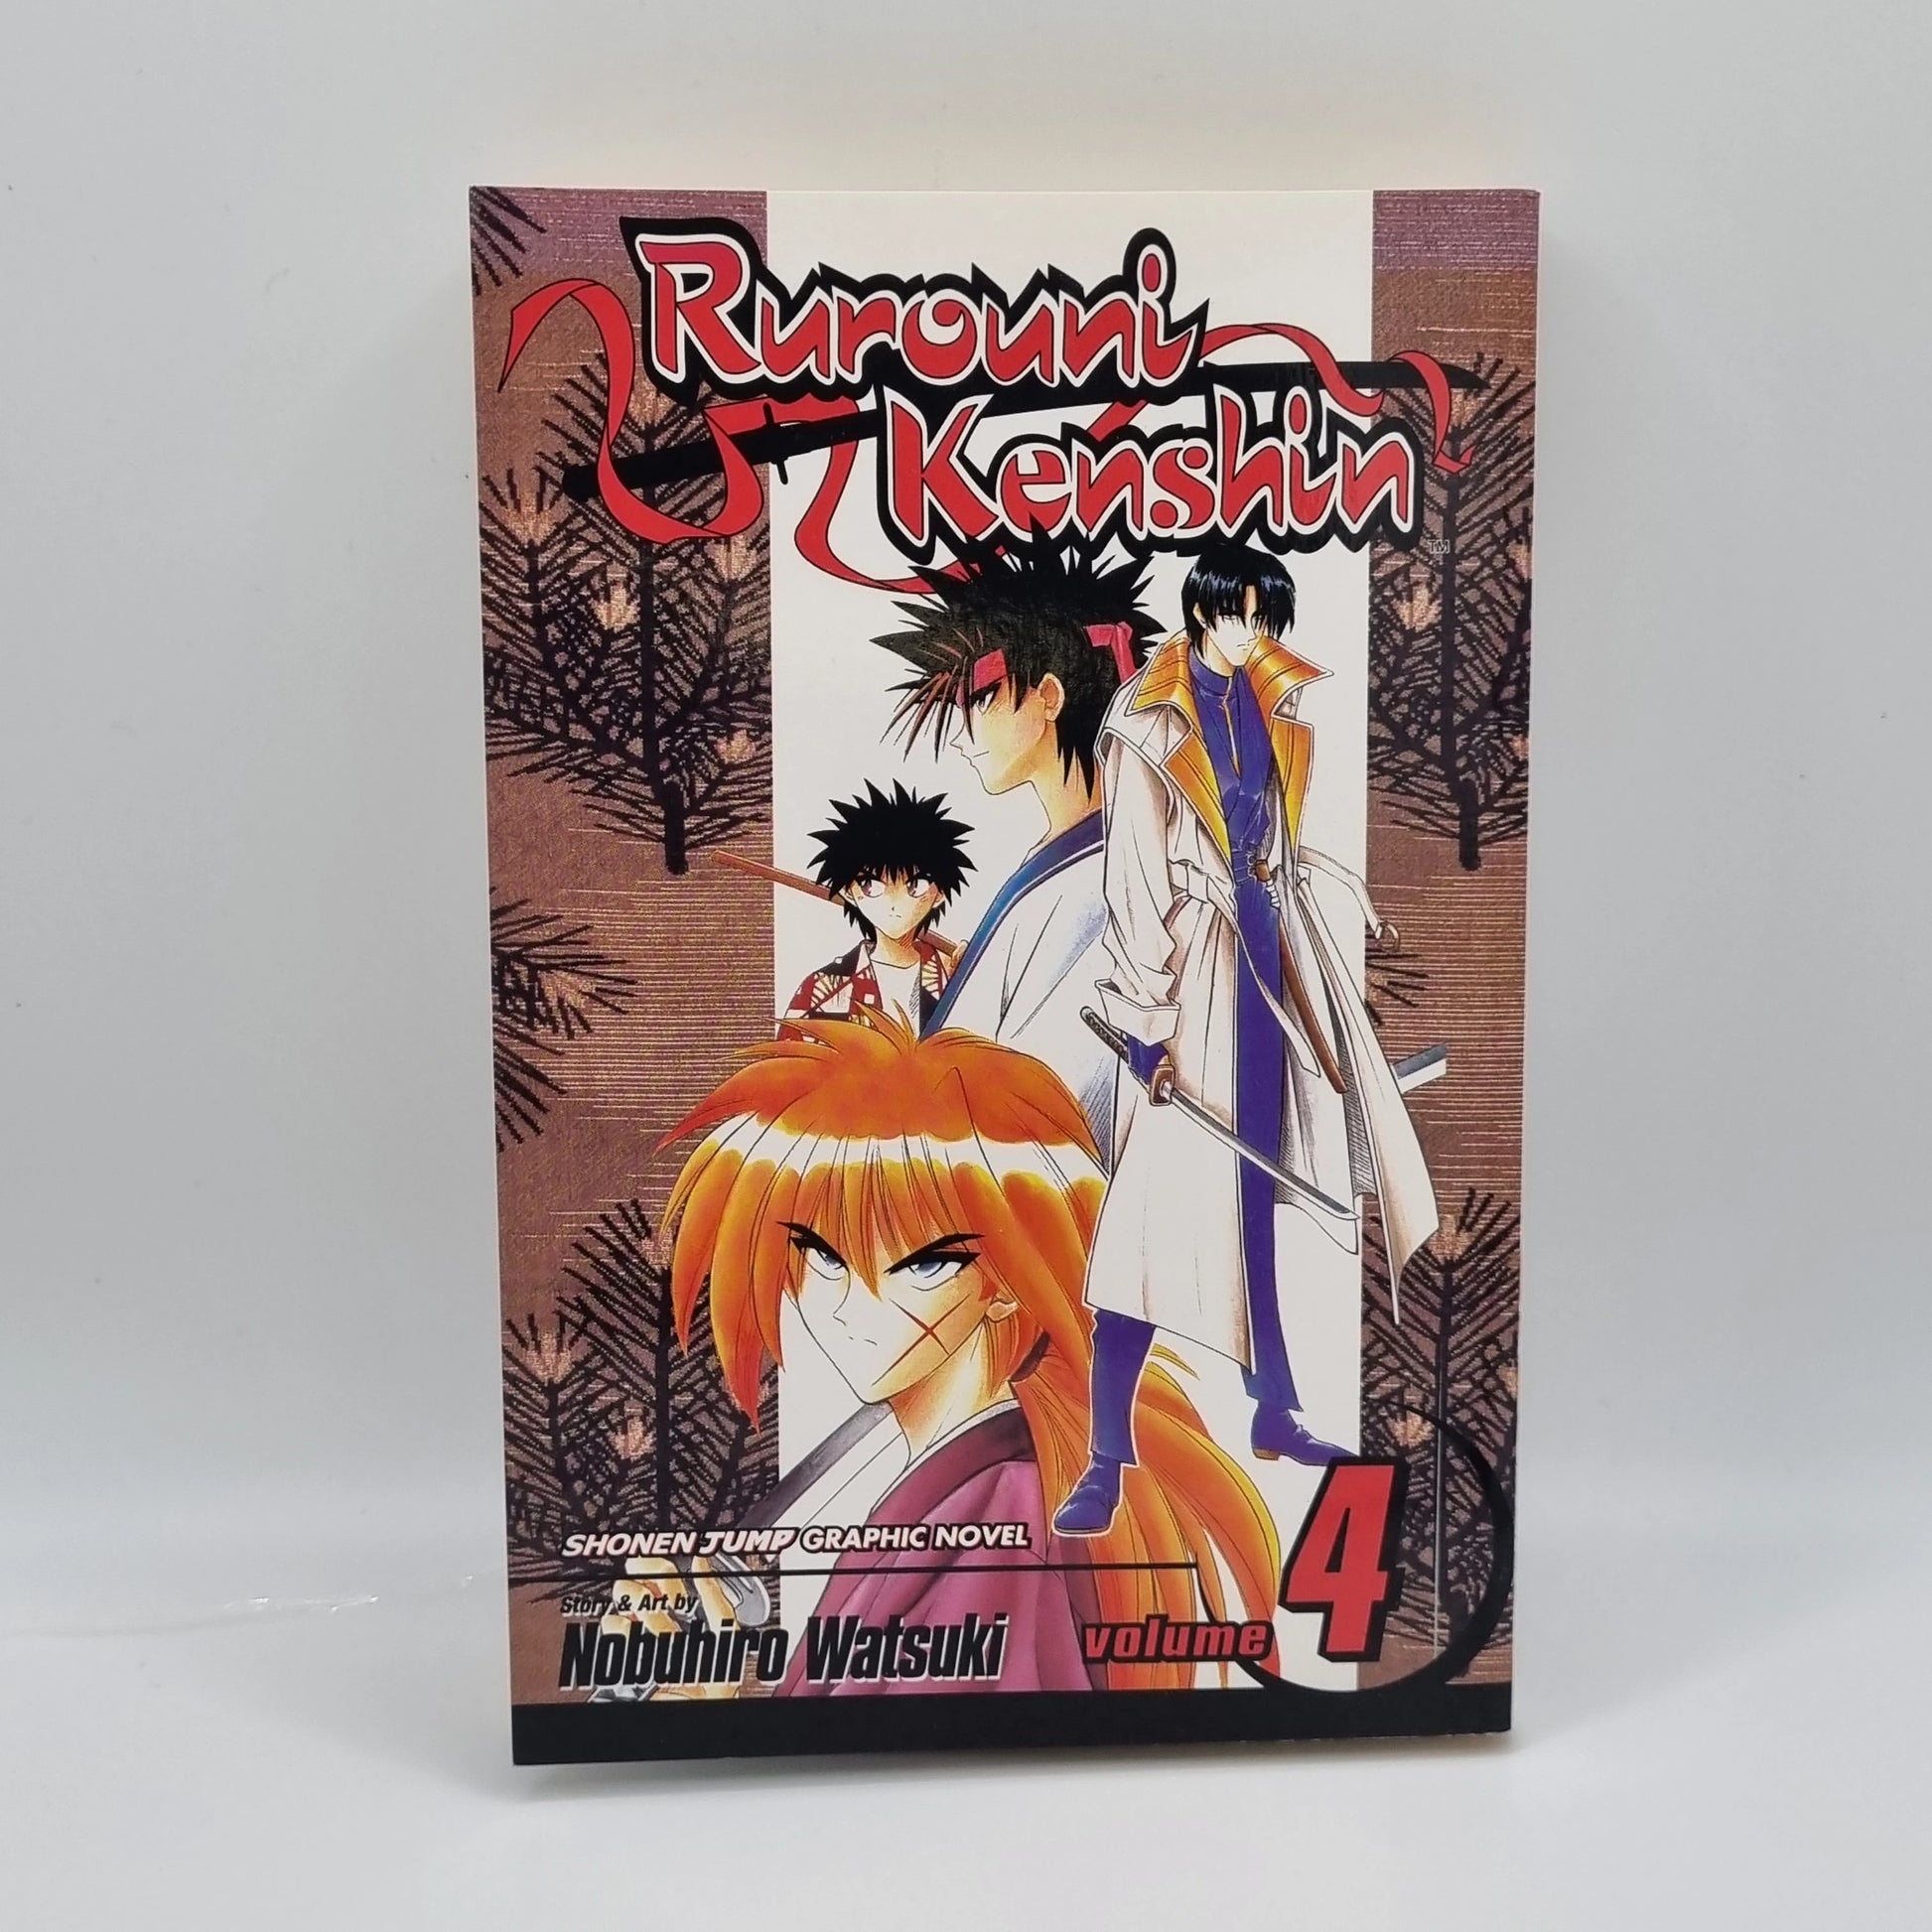 Anime store, Rurouni Kenshin Vol 4, Front View